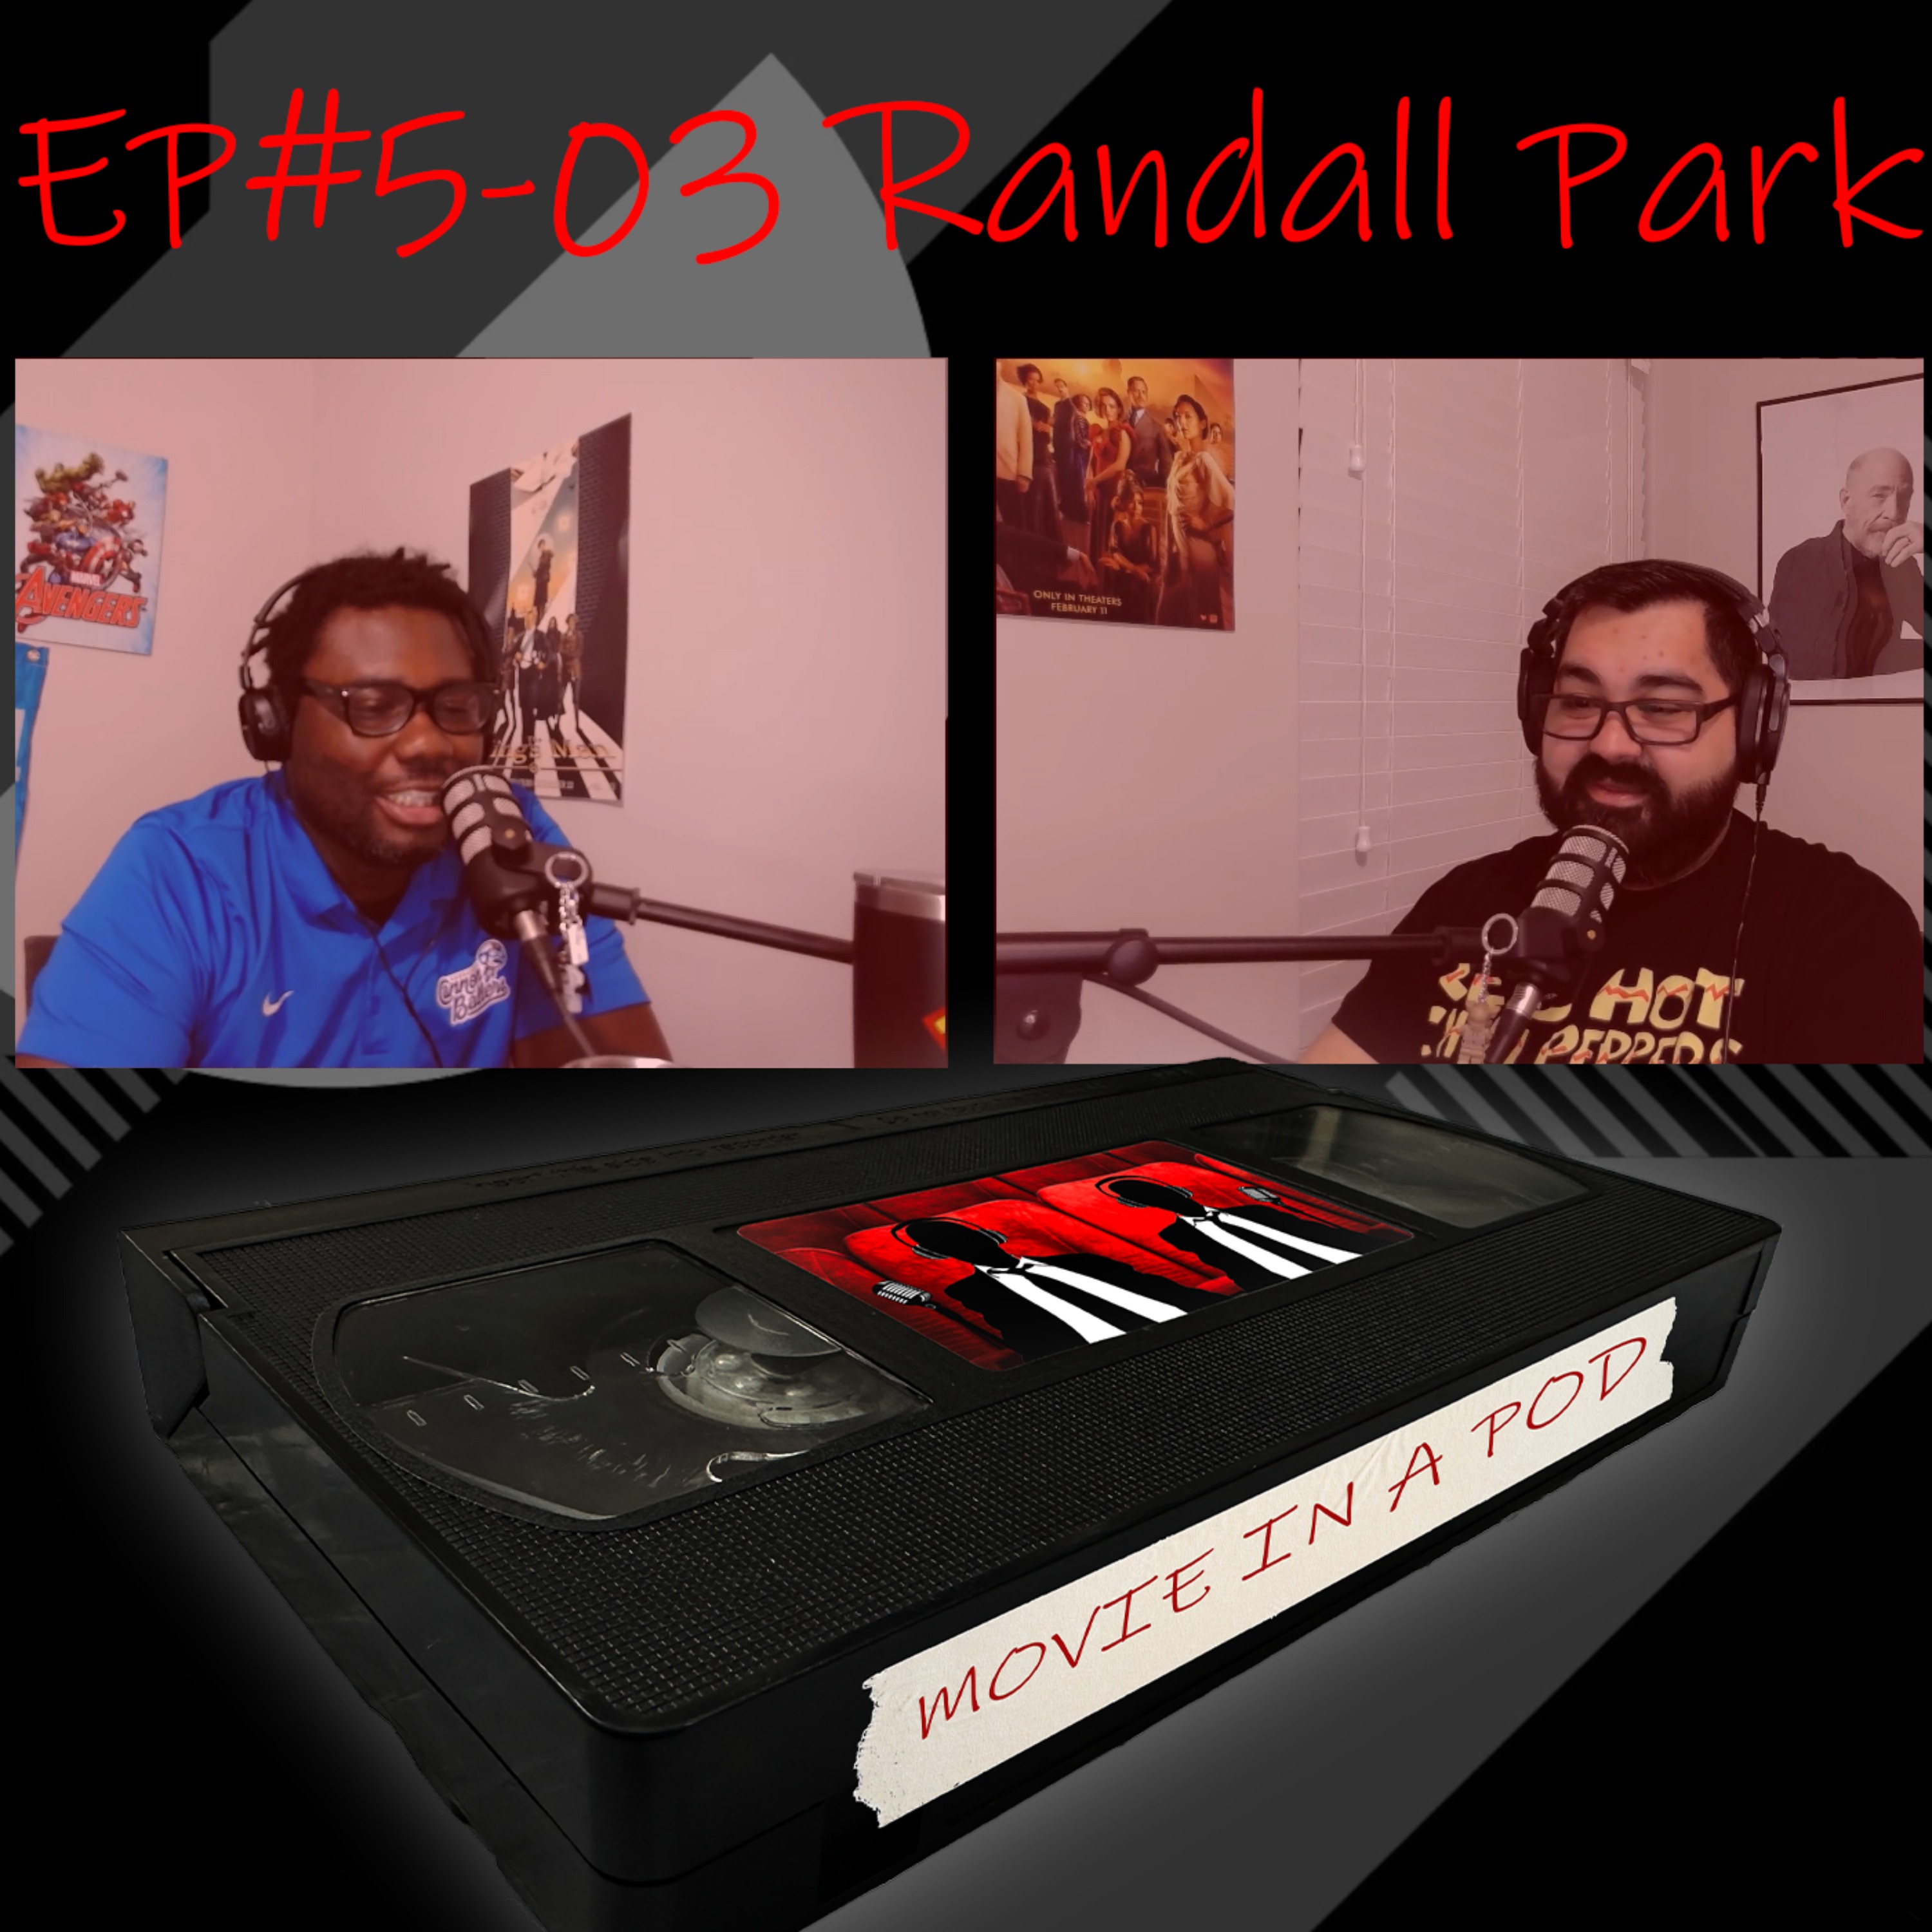 EP#5-03 Randall Park